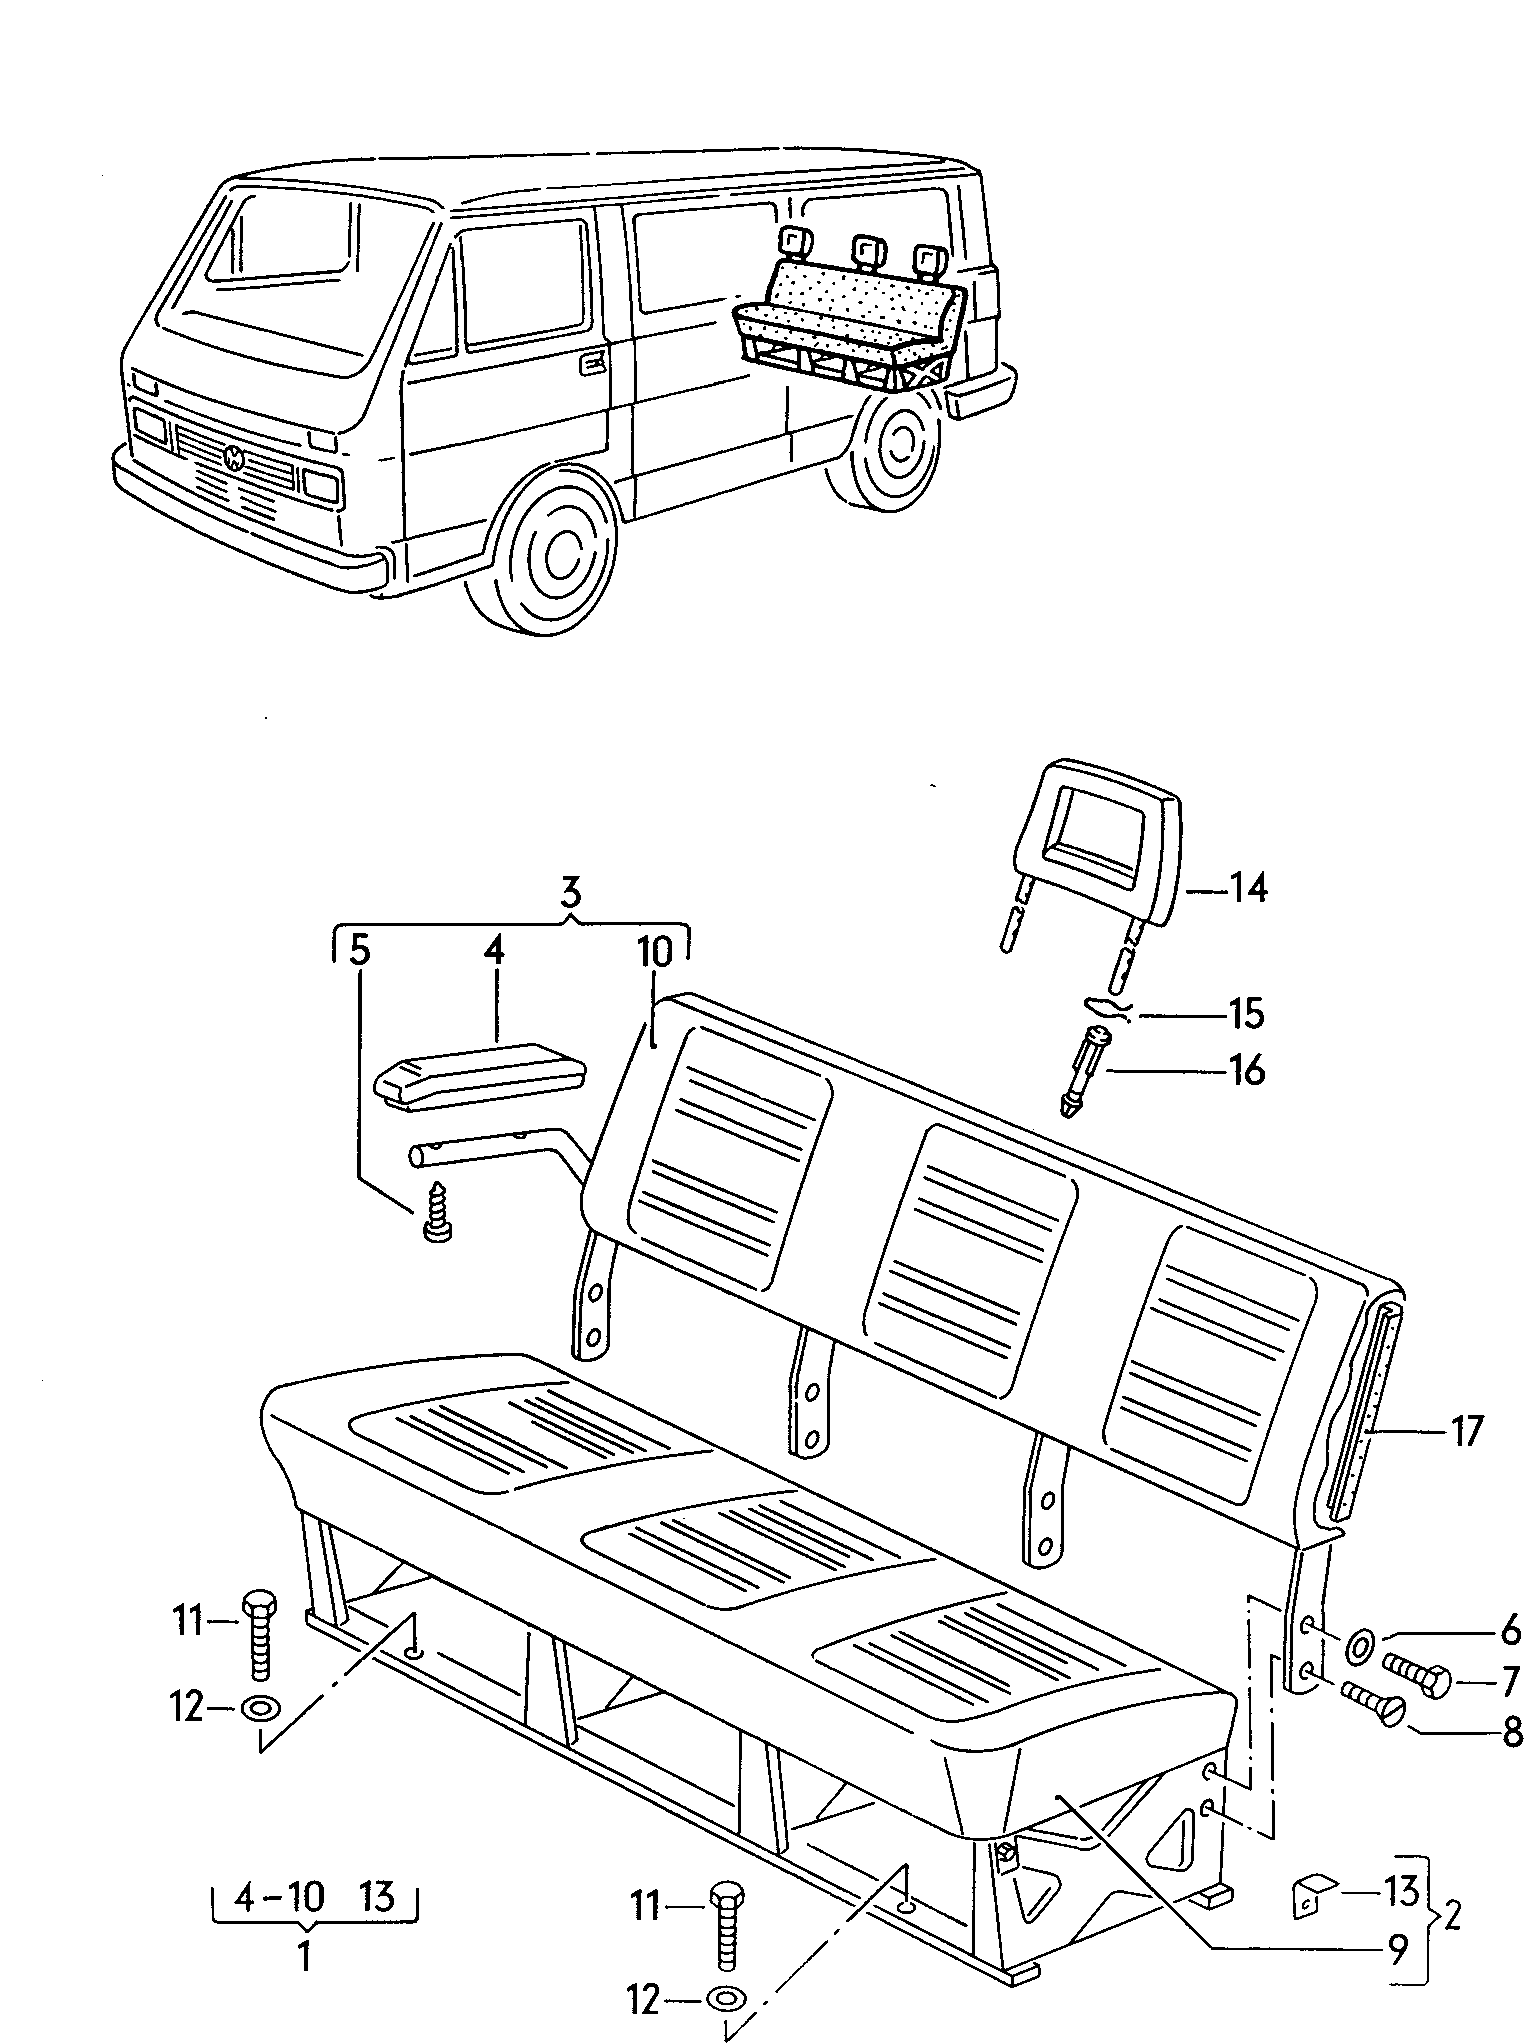 Seat and backrest rear - LT, LT 4x4 - lt